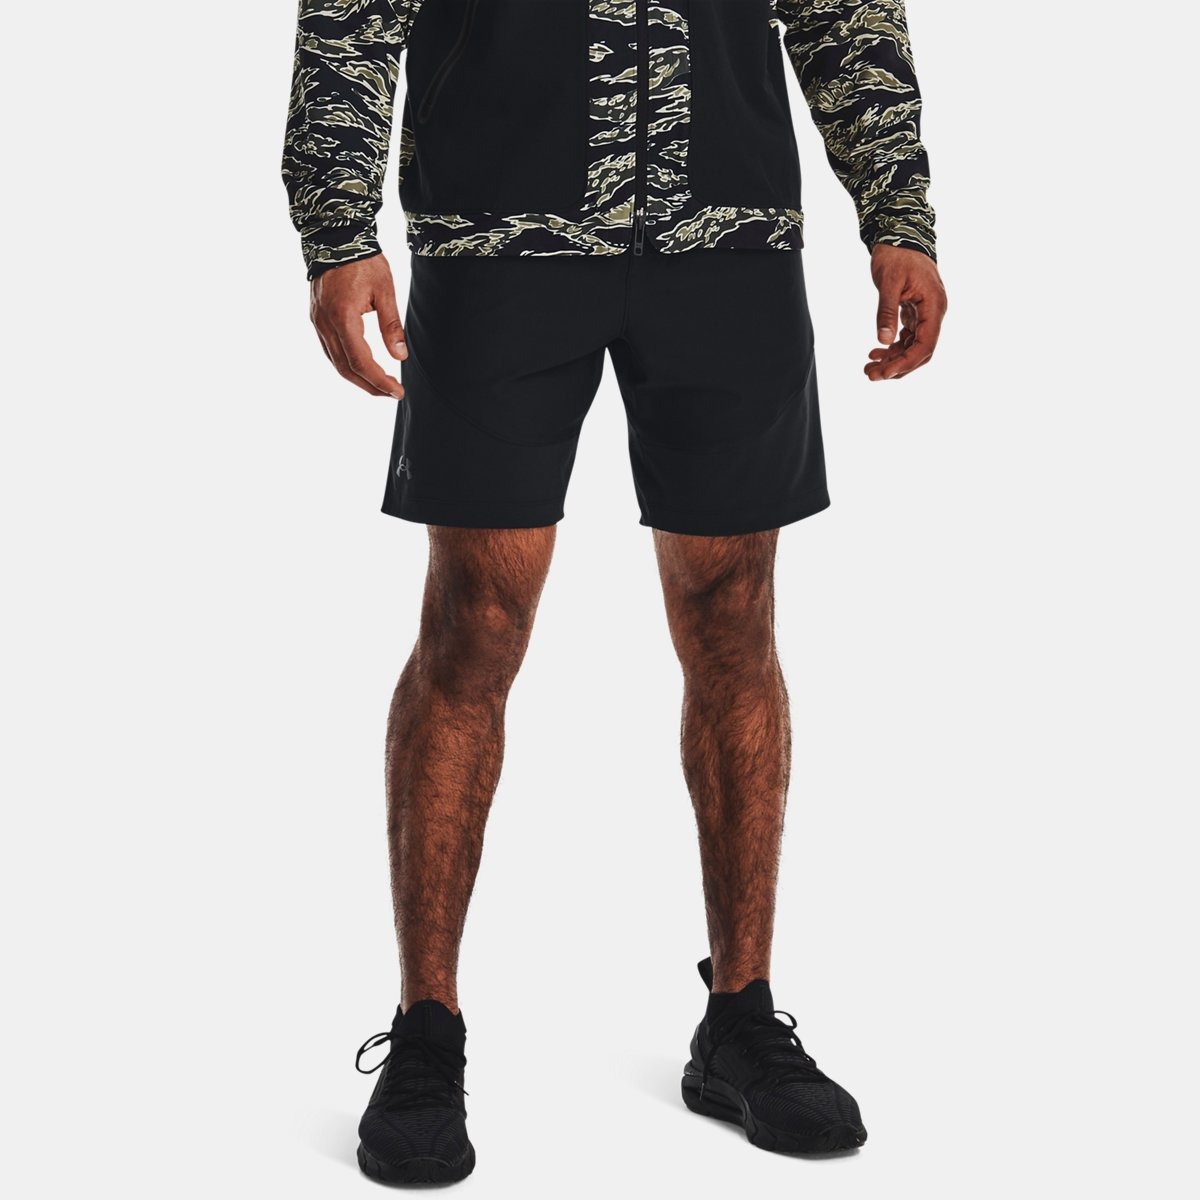 Under Armour - Man Shorts - Black GOOFASH